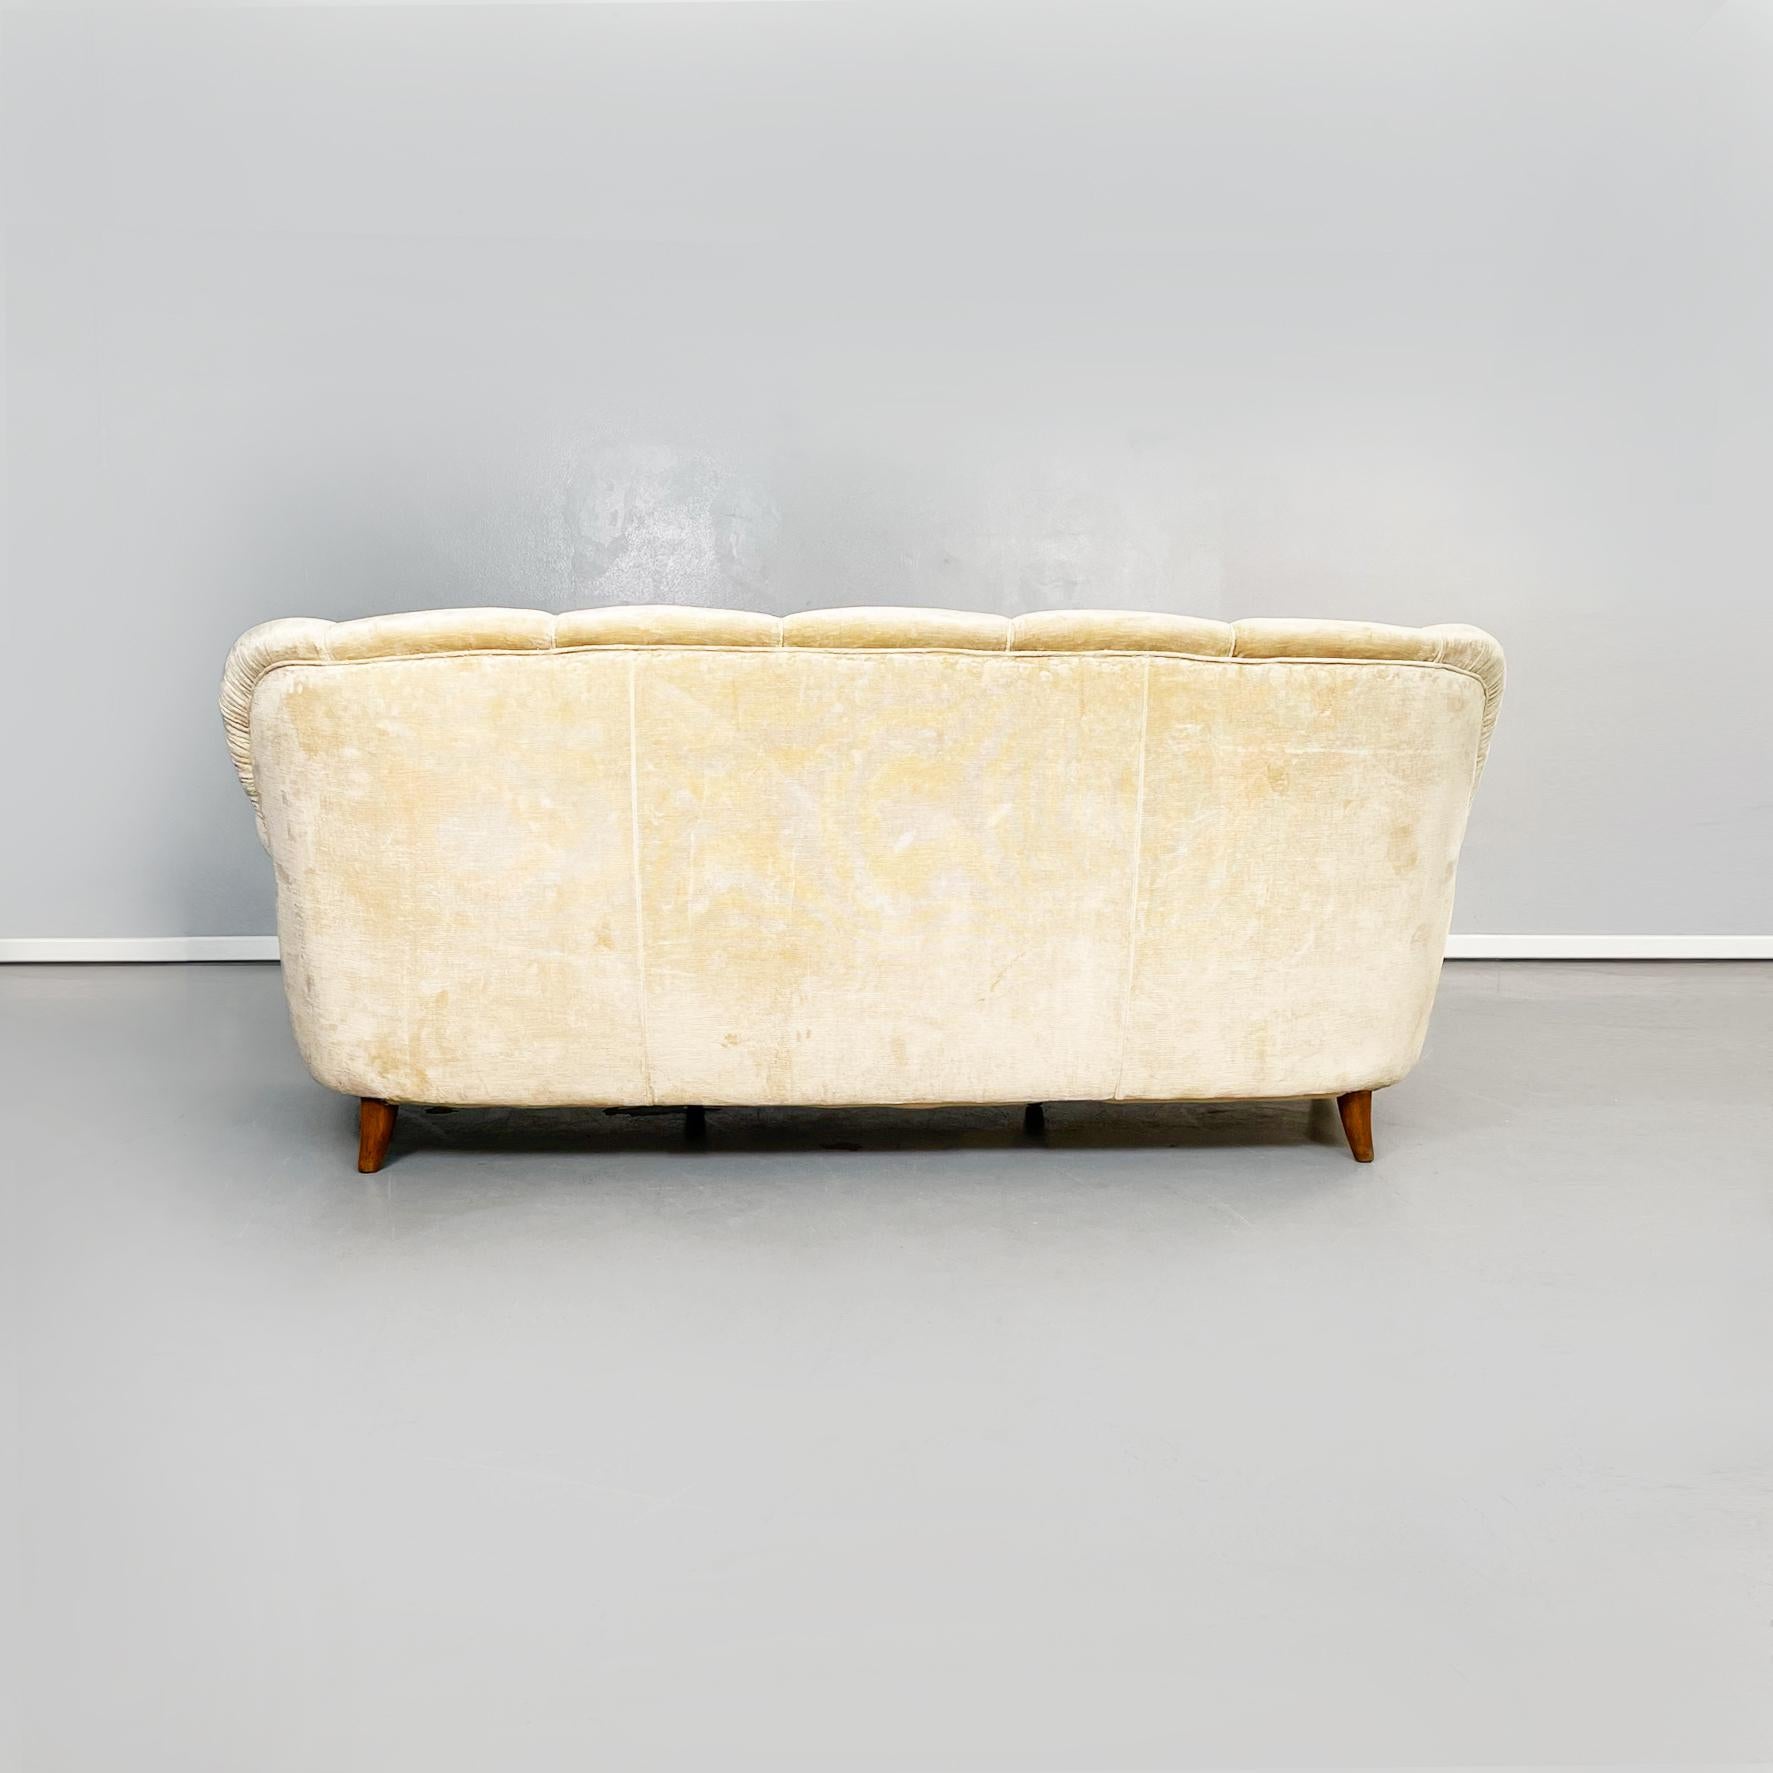 Mid-20th Century Italian Mid-Century Modern Wooden Sofa in Beige Fabric, 1960s For Sale